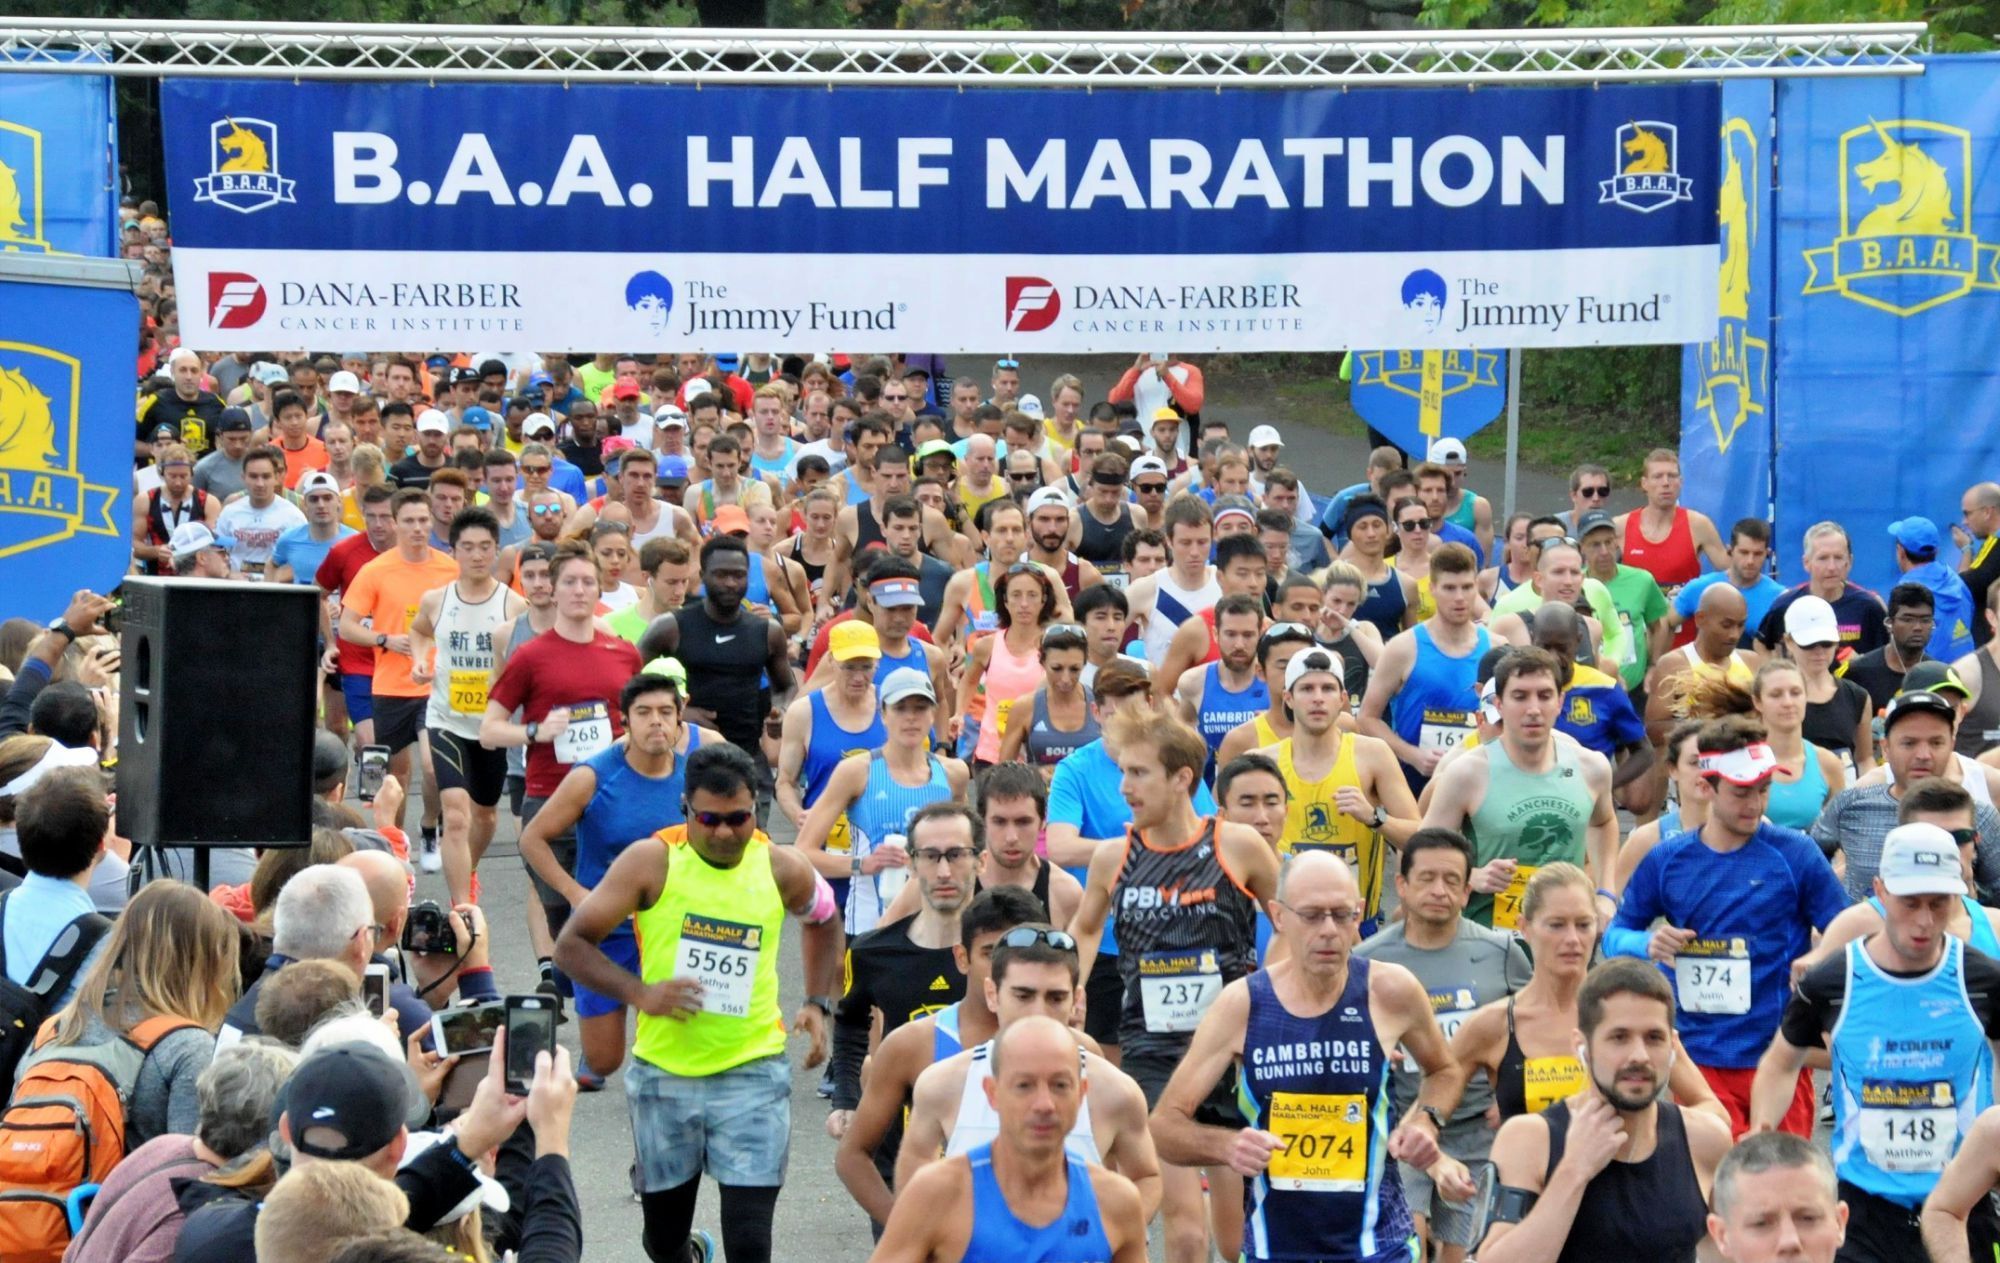 B.A.A. Half Marathon